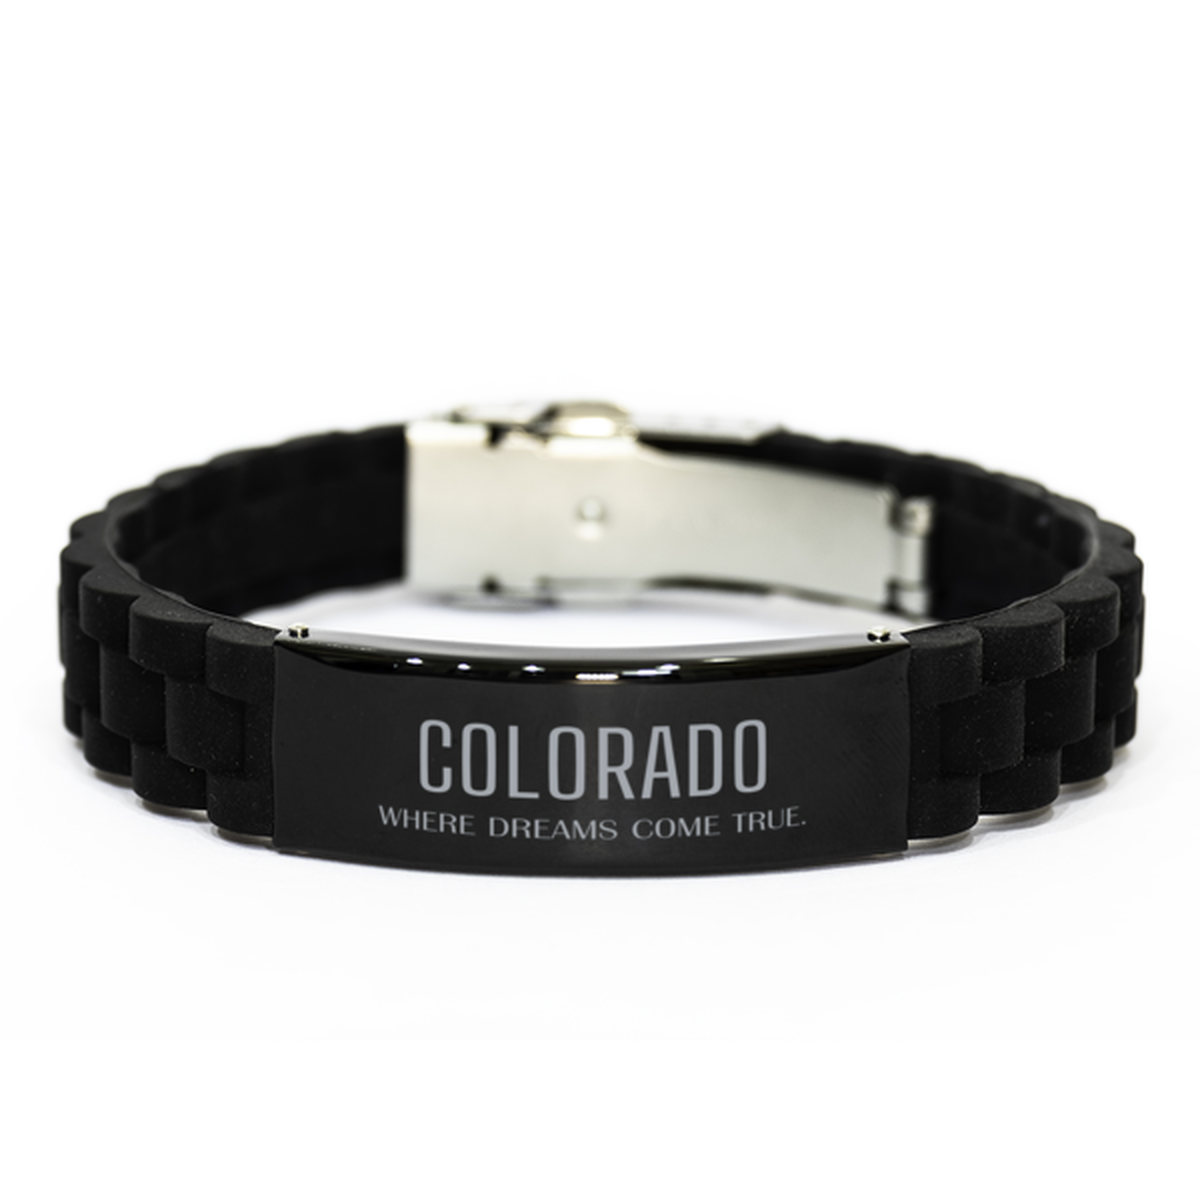 Love Colorado State Black Glidelock Clasp Bracelet, Colorado Where dreams come true, Birthday Inspirational Gifts For Colorado Men, Women, Friends